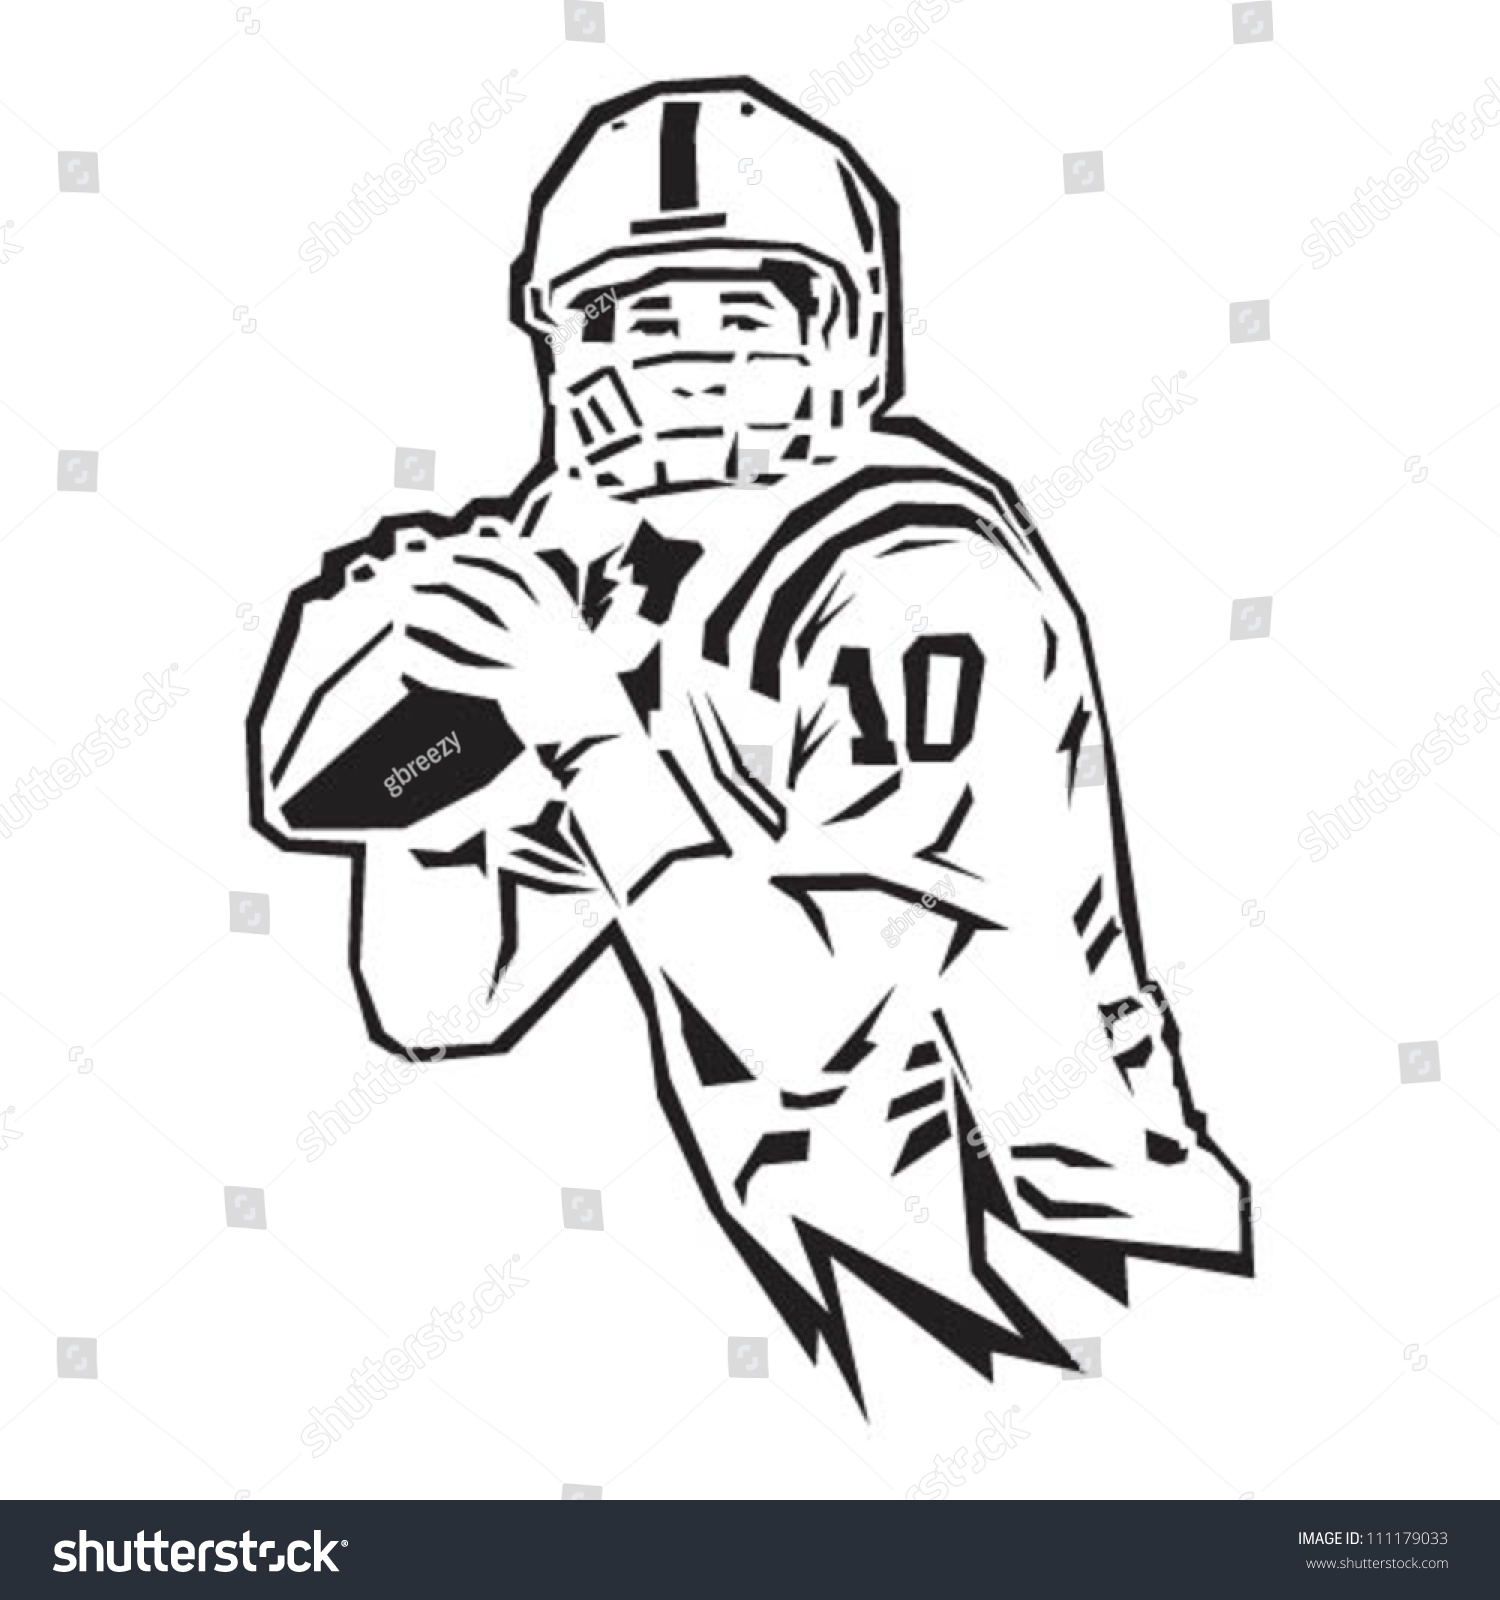 quarterback clipart - photo #33